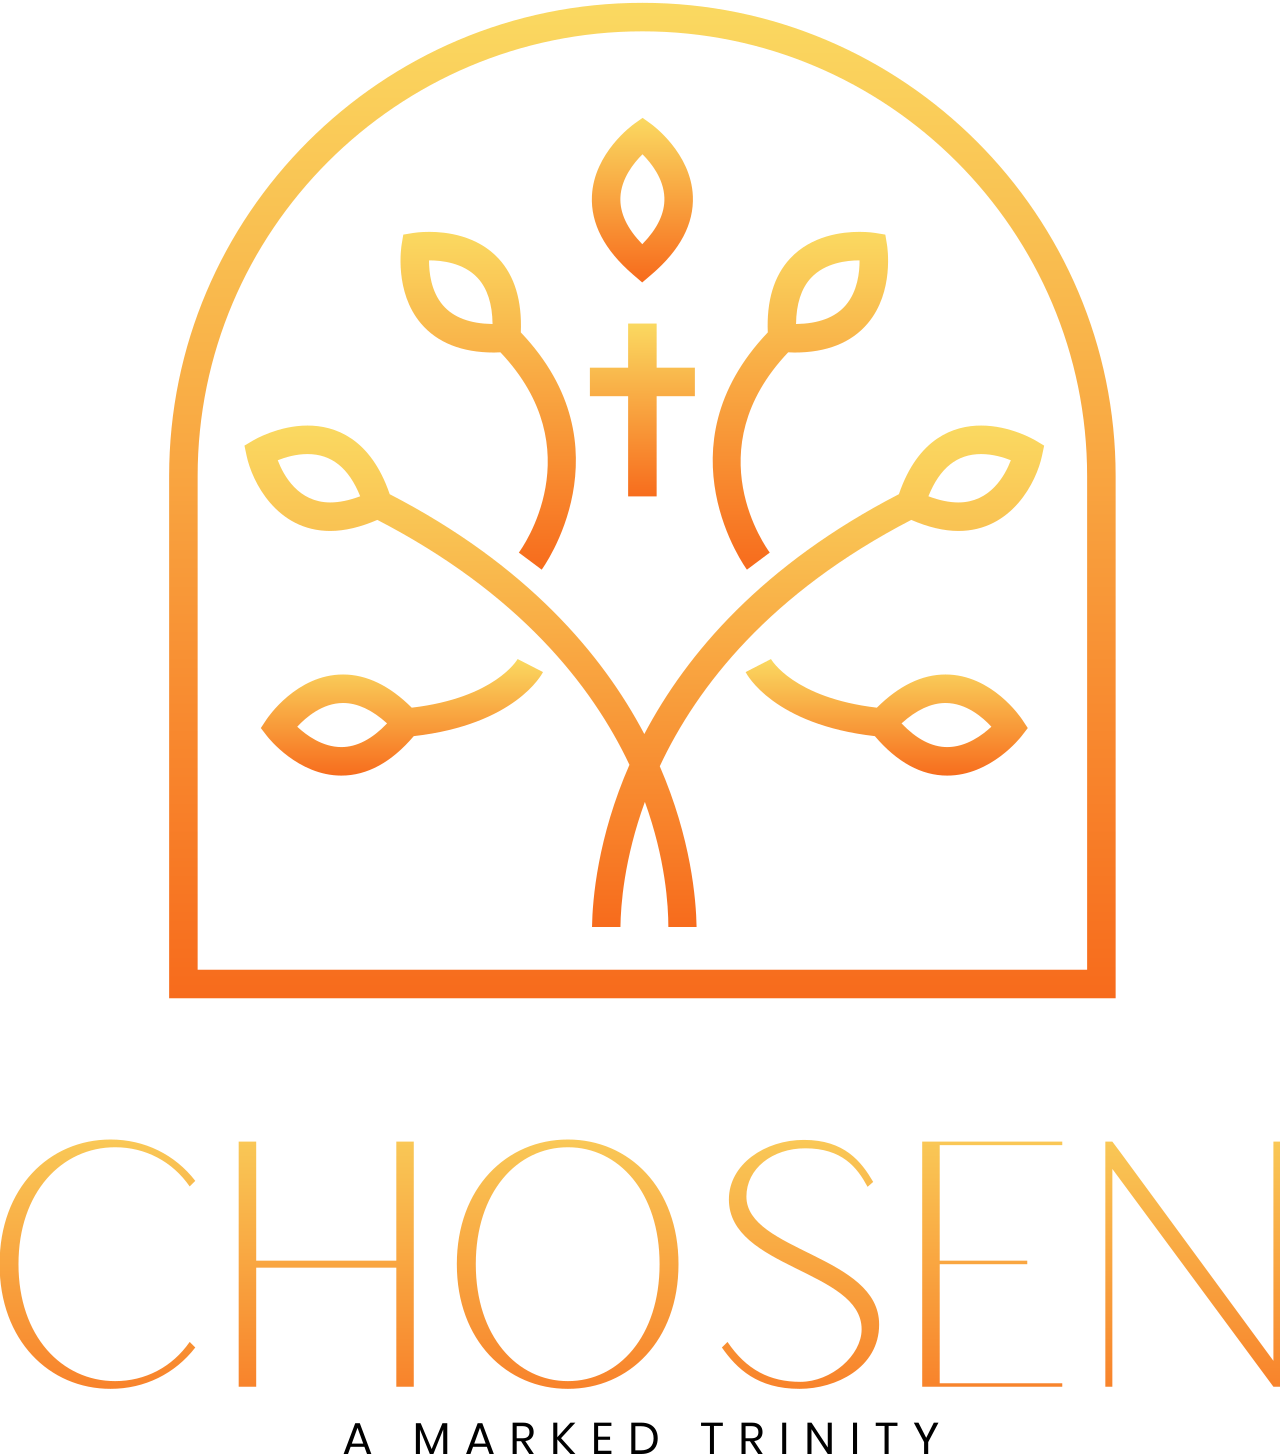 Chosen's web page